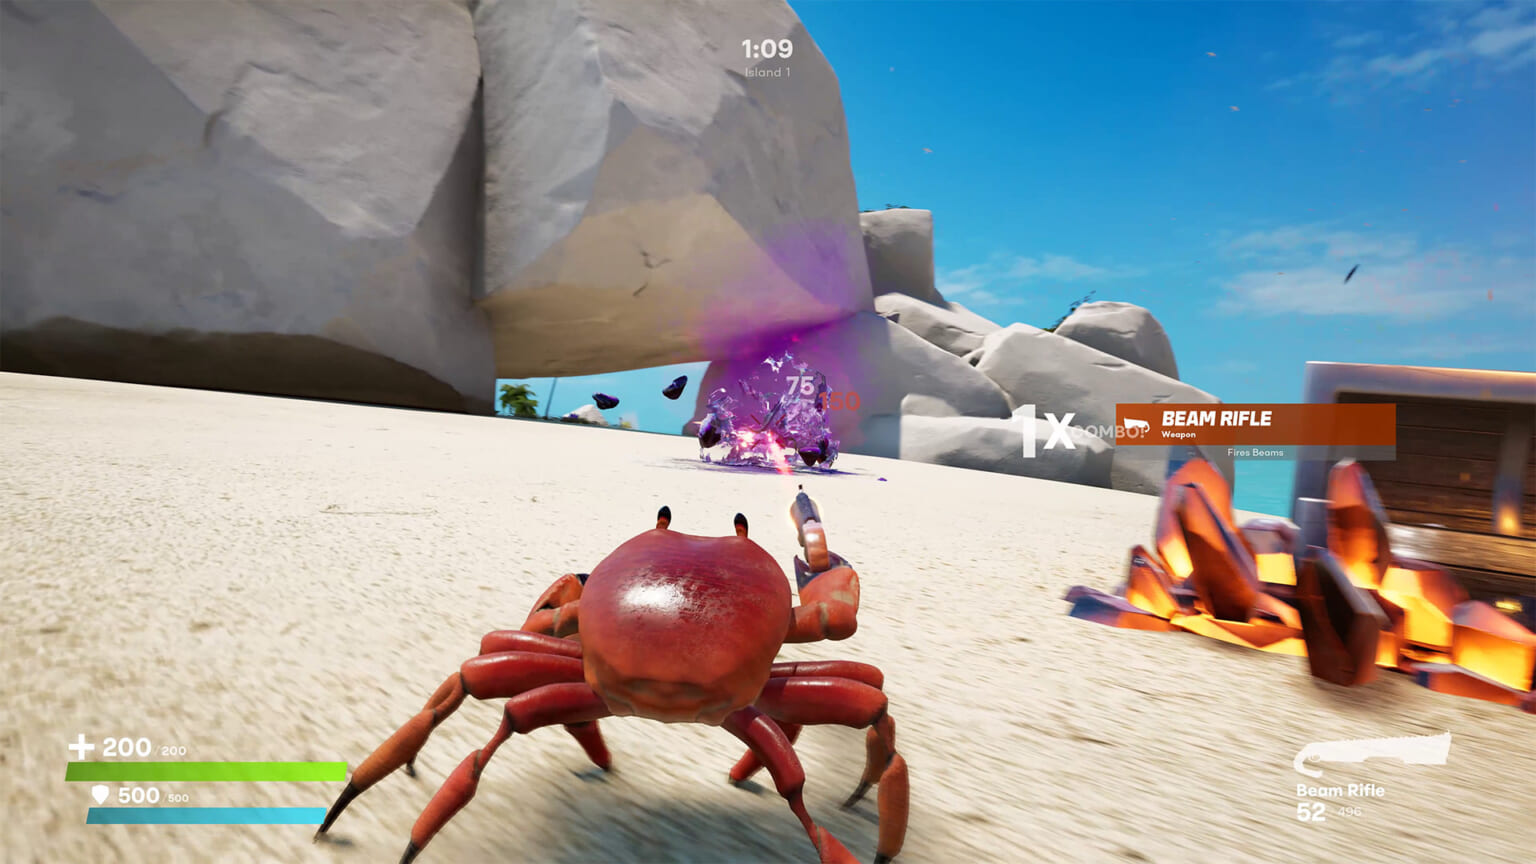 crab game online download